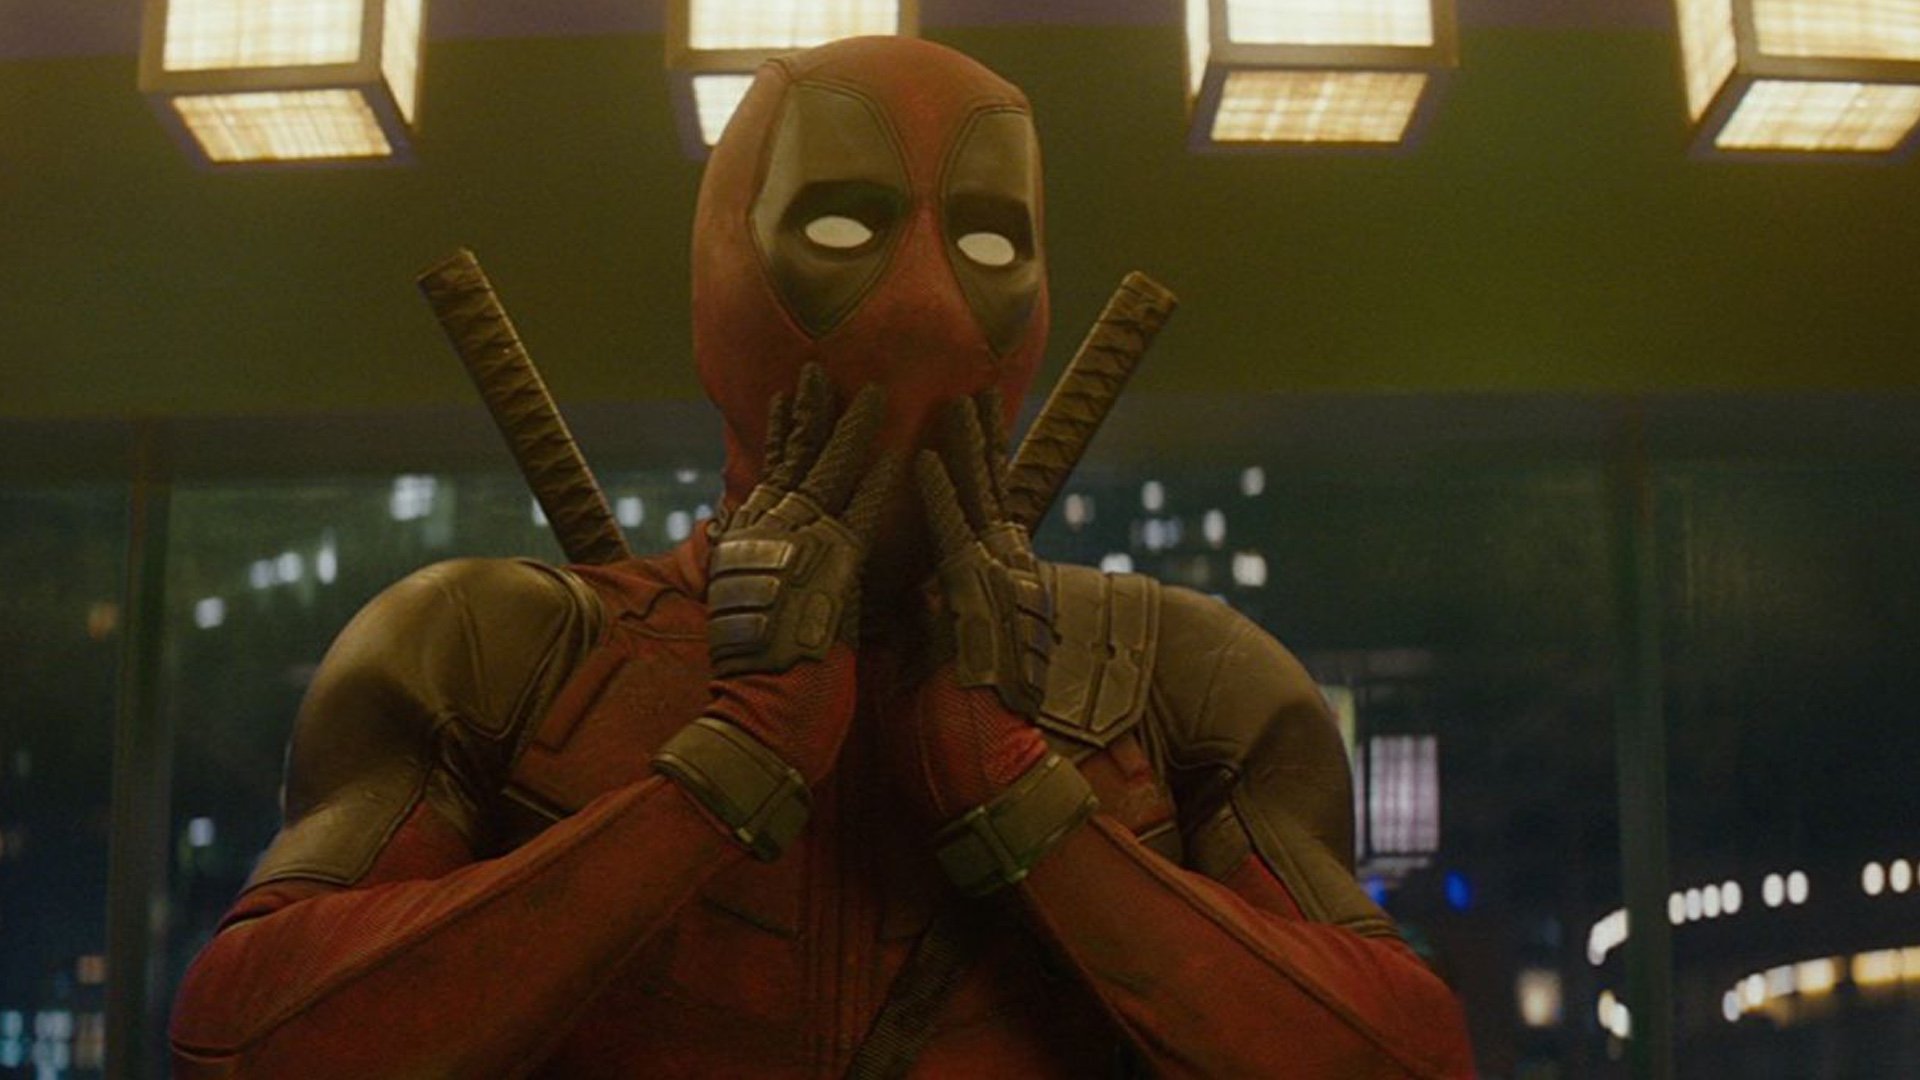 Deadpool 3' Star Ryan Reynolds Pleads For Restraint On Using